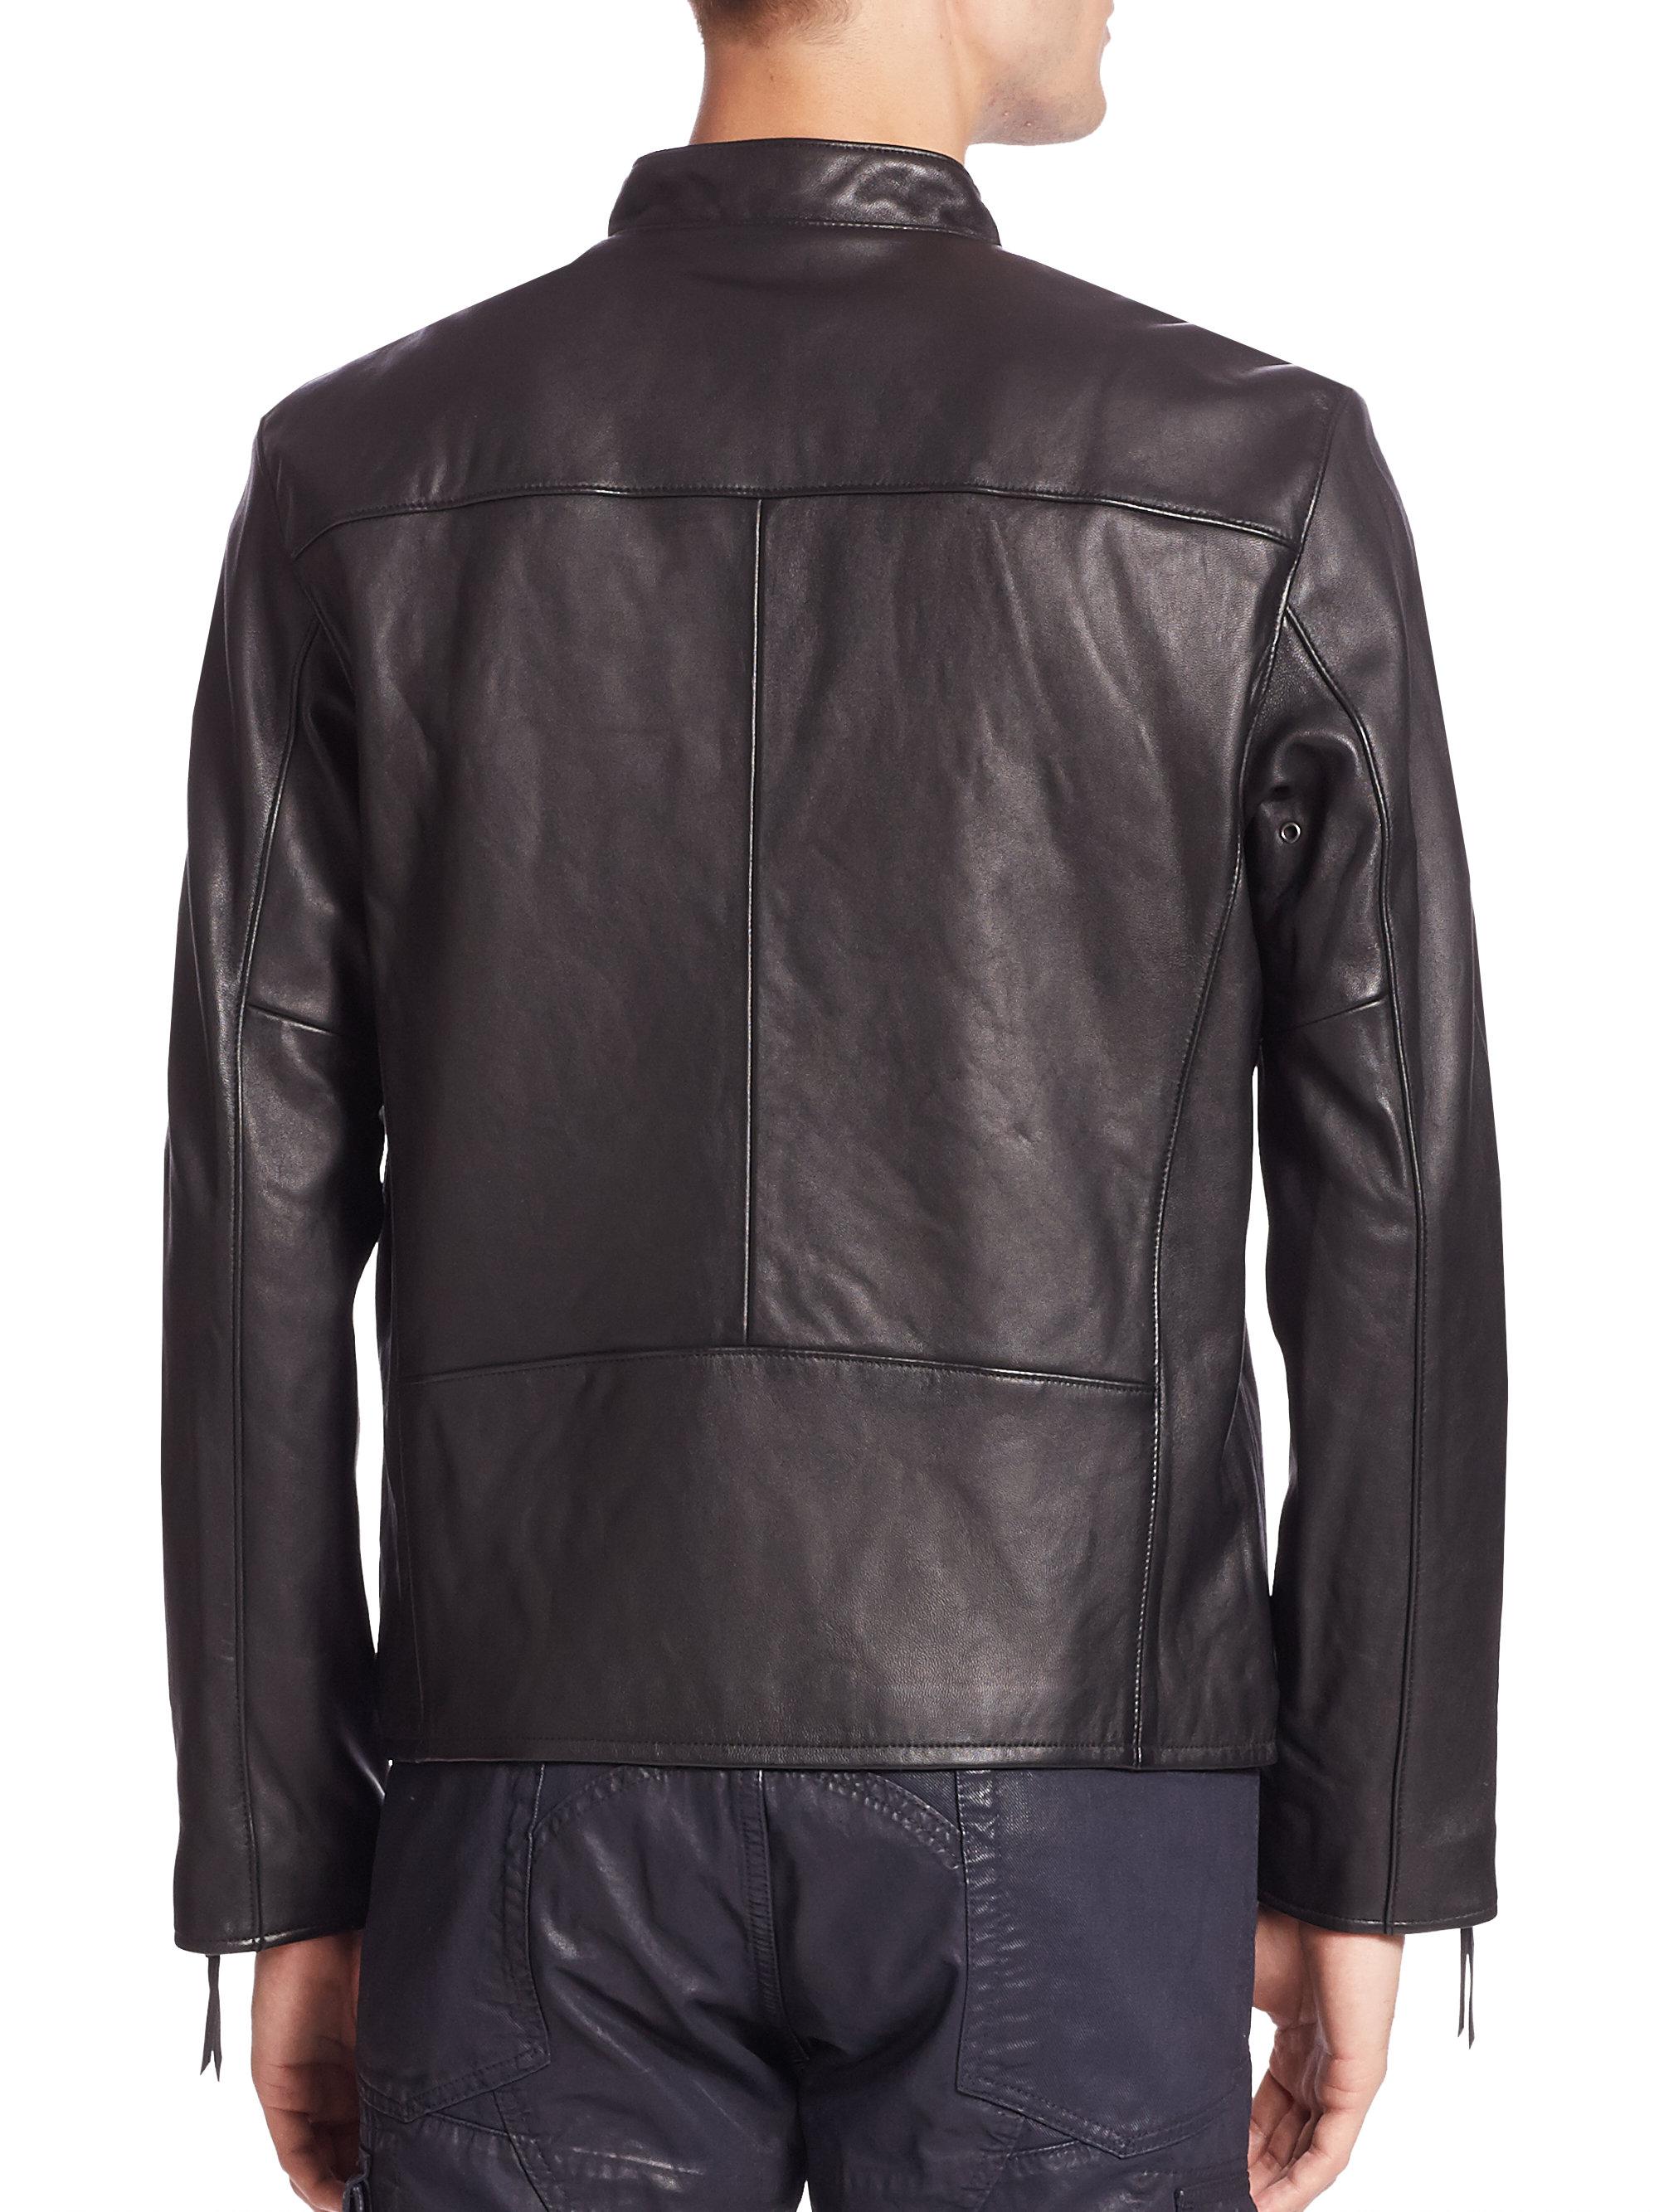 Lyst - Polo Ralph Lauren Lambskin Leather Cafe Racer Jacket in Black ...